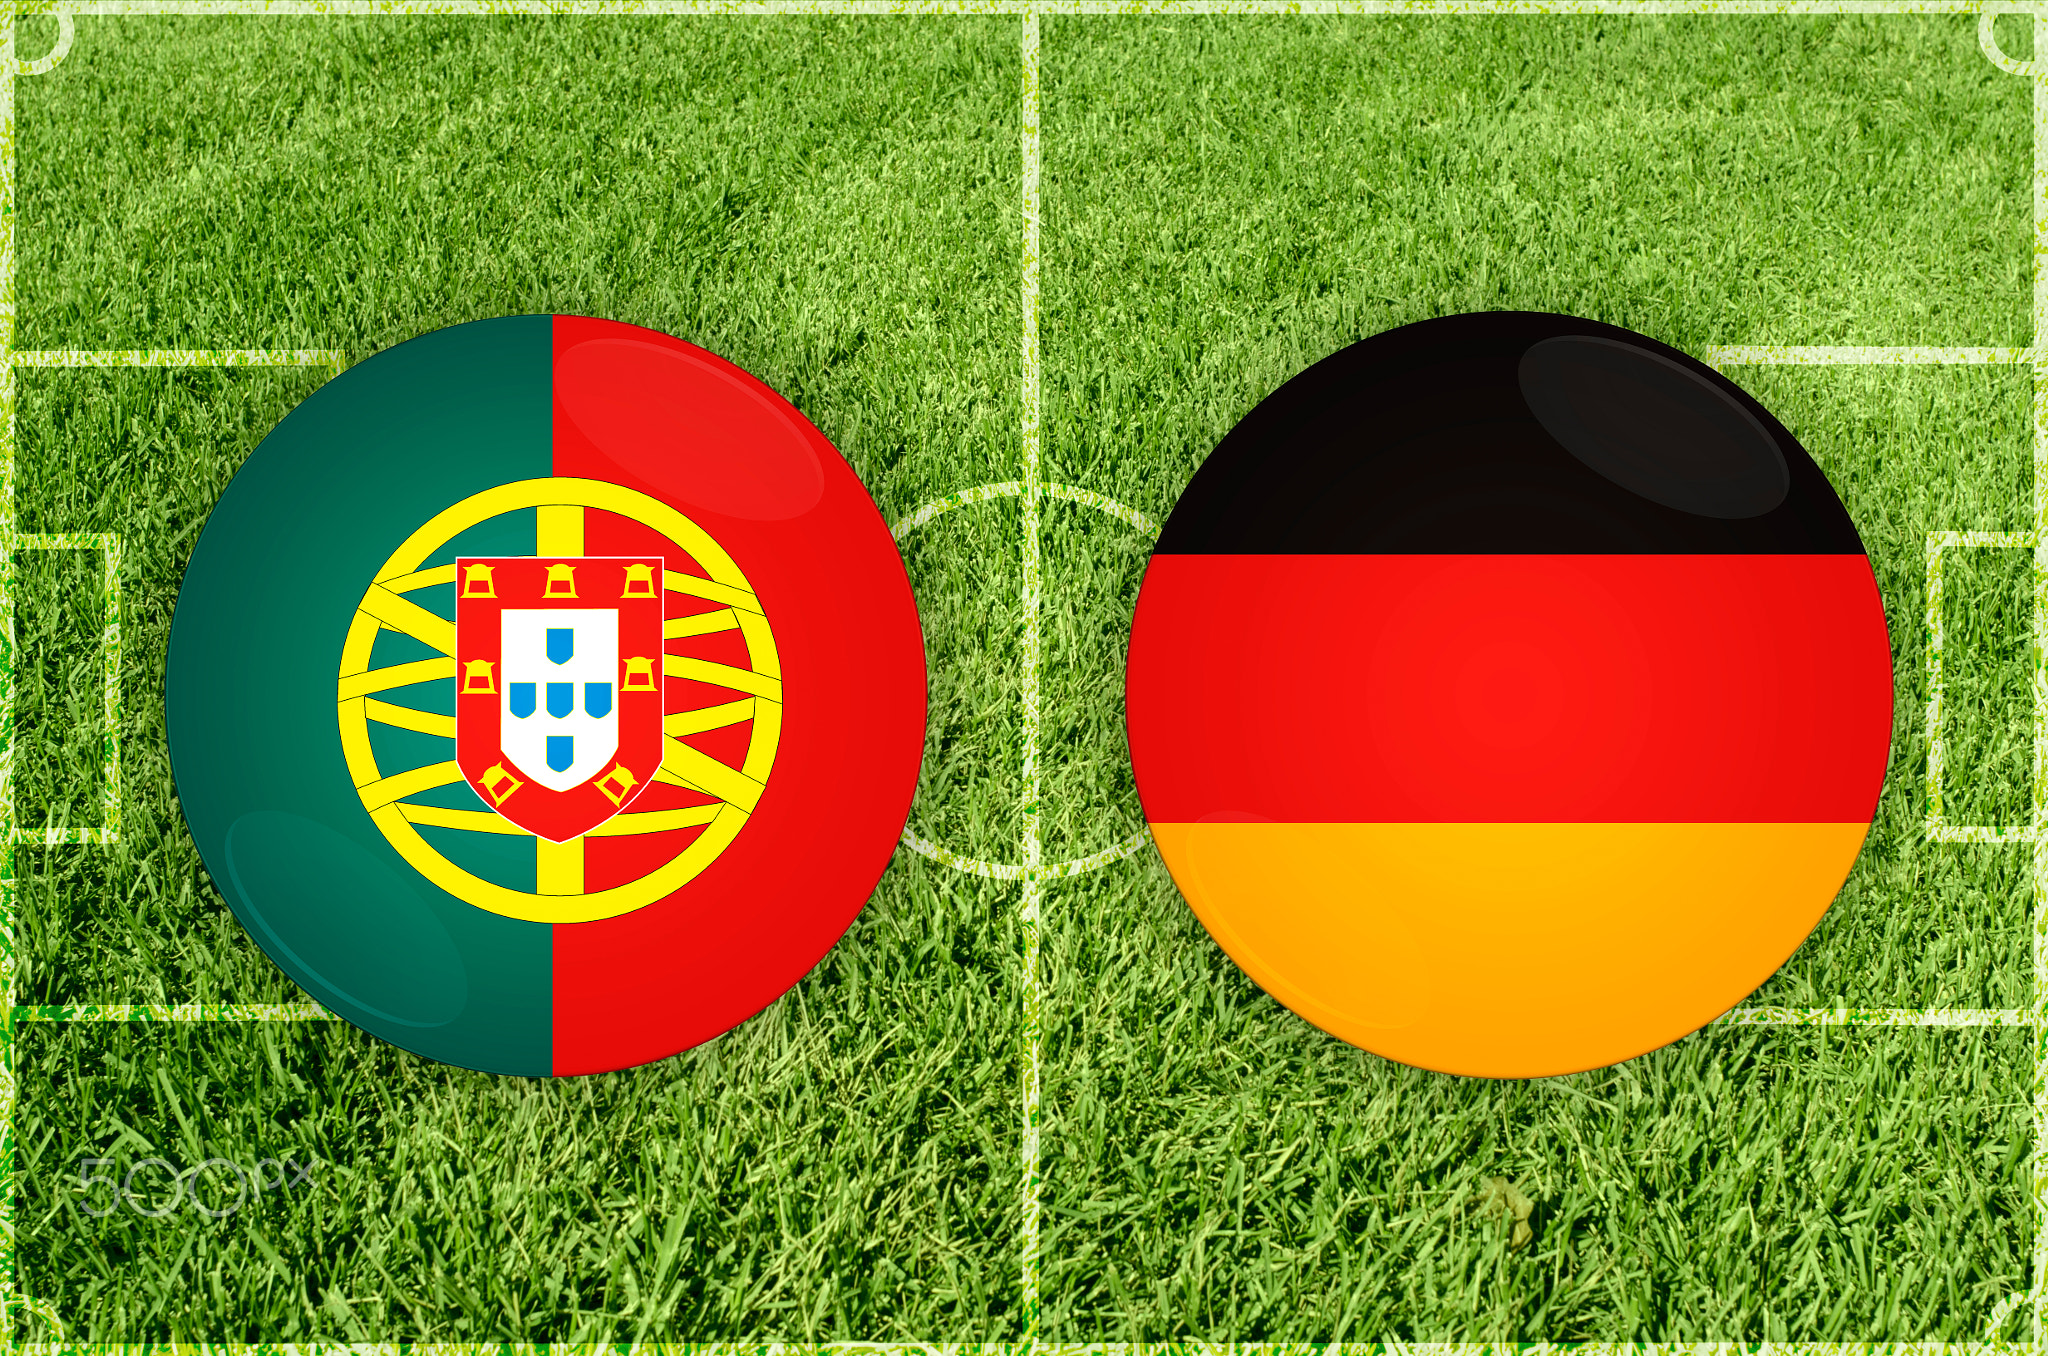 Portugal vs Germany